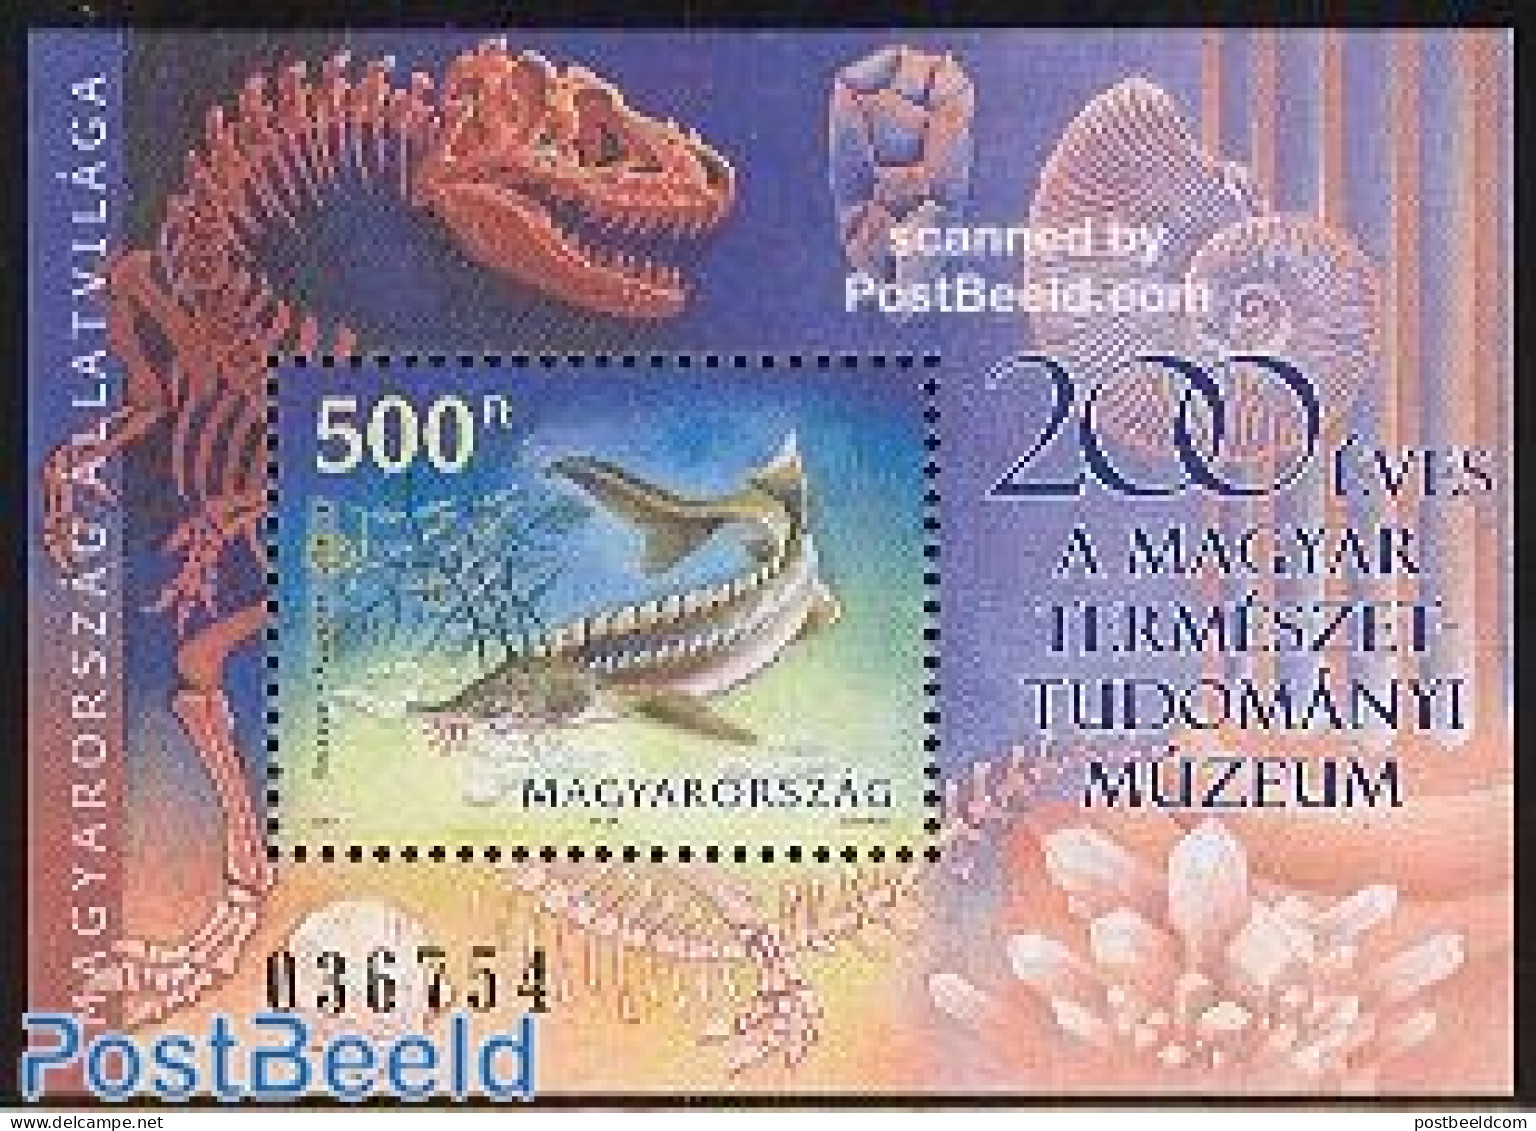 Hungary 2002 Fish S/s, Mint NH, Nature - Fish - Prehistoric Animals - Unused Stamps